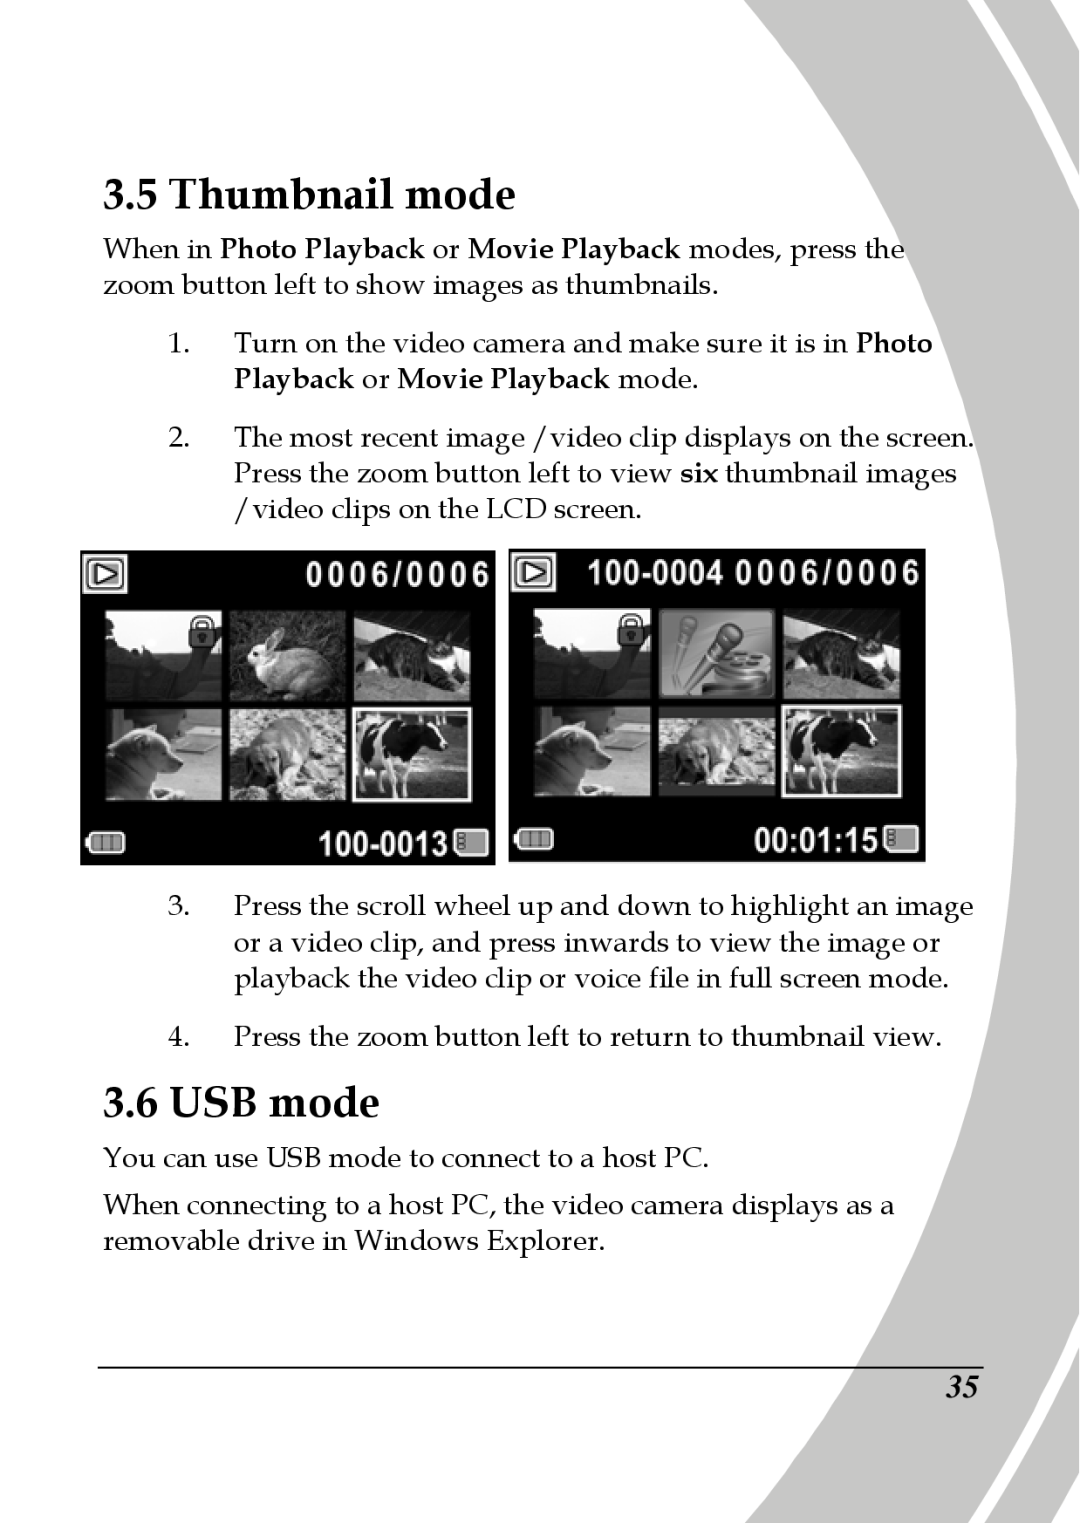 DXG Technology DXG-580V HD manual Thumbnail mode, USB mode 